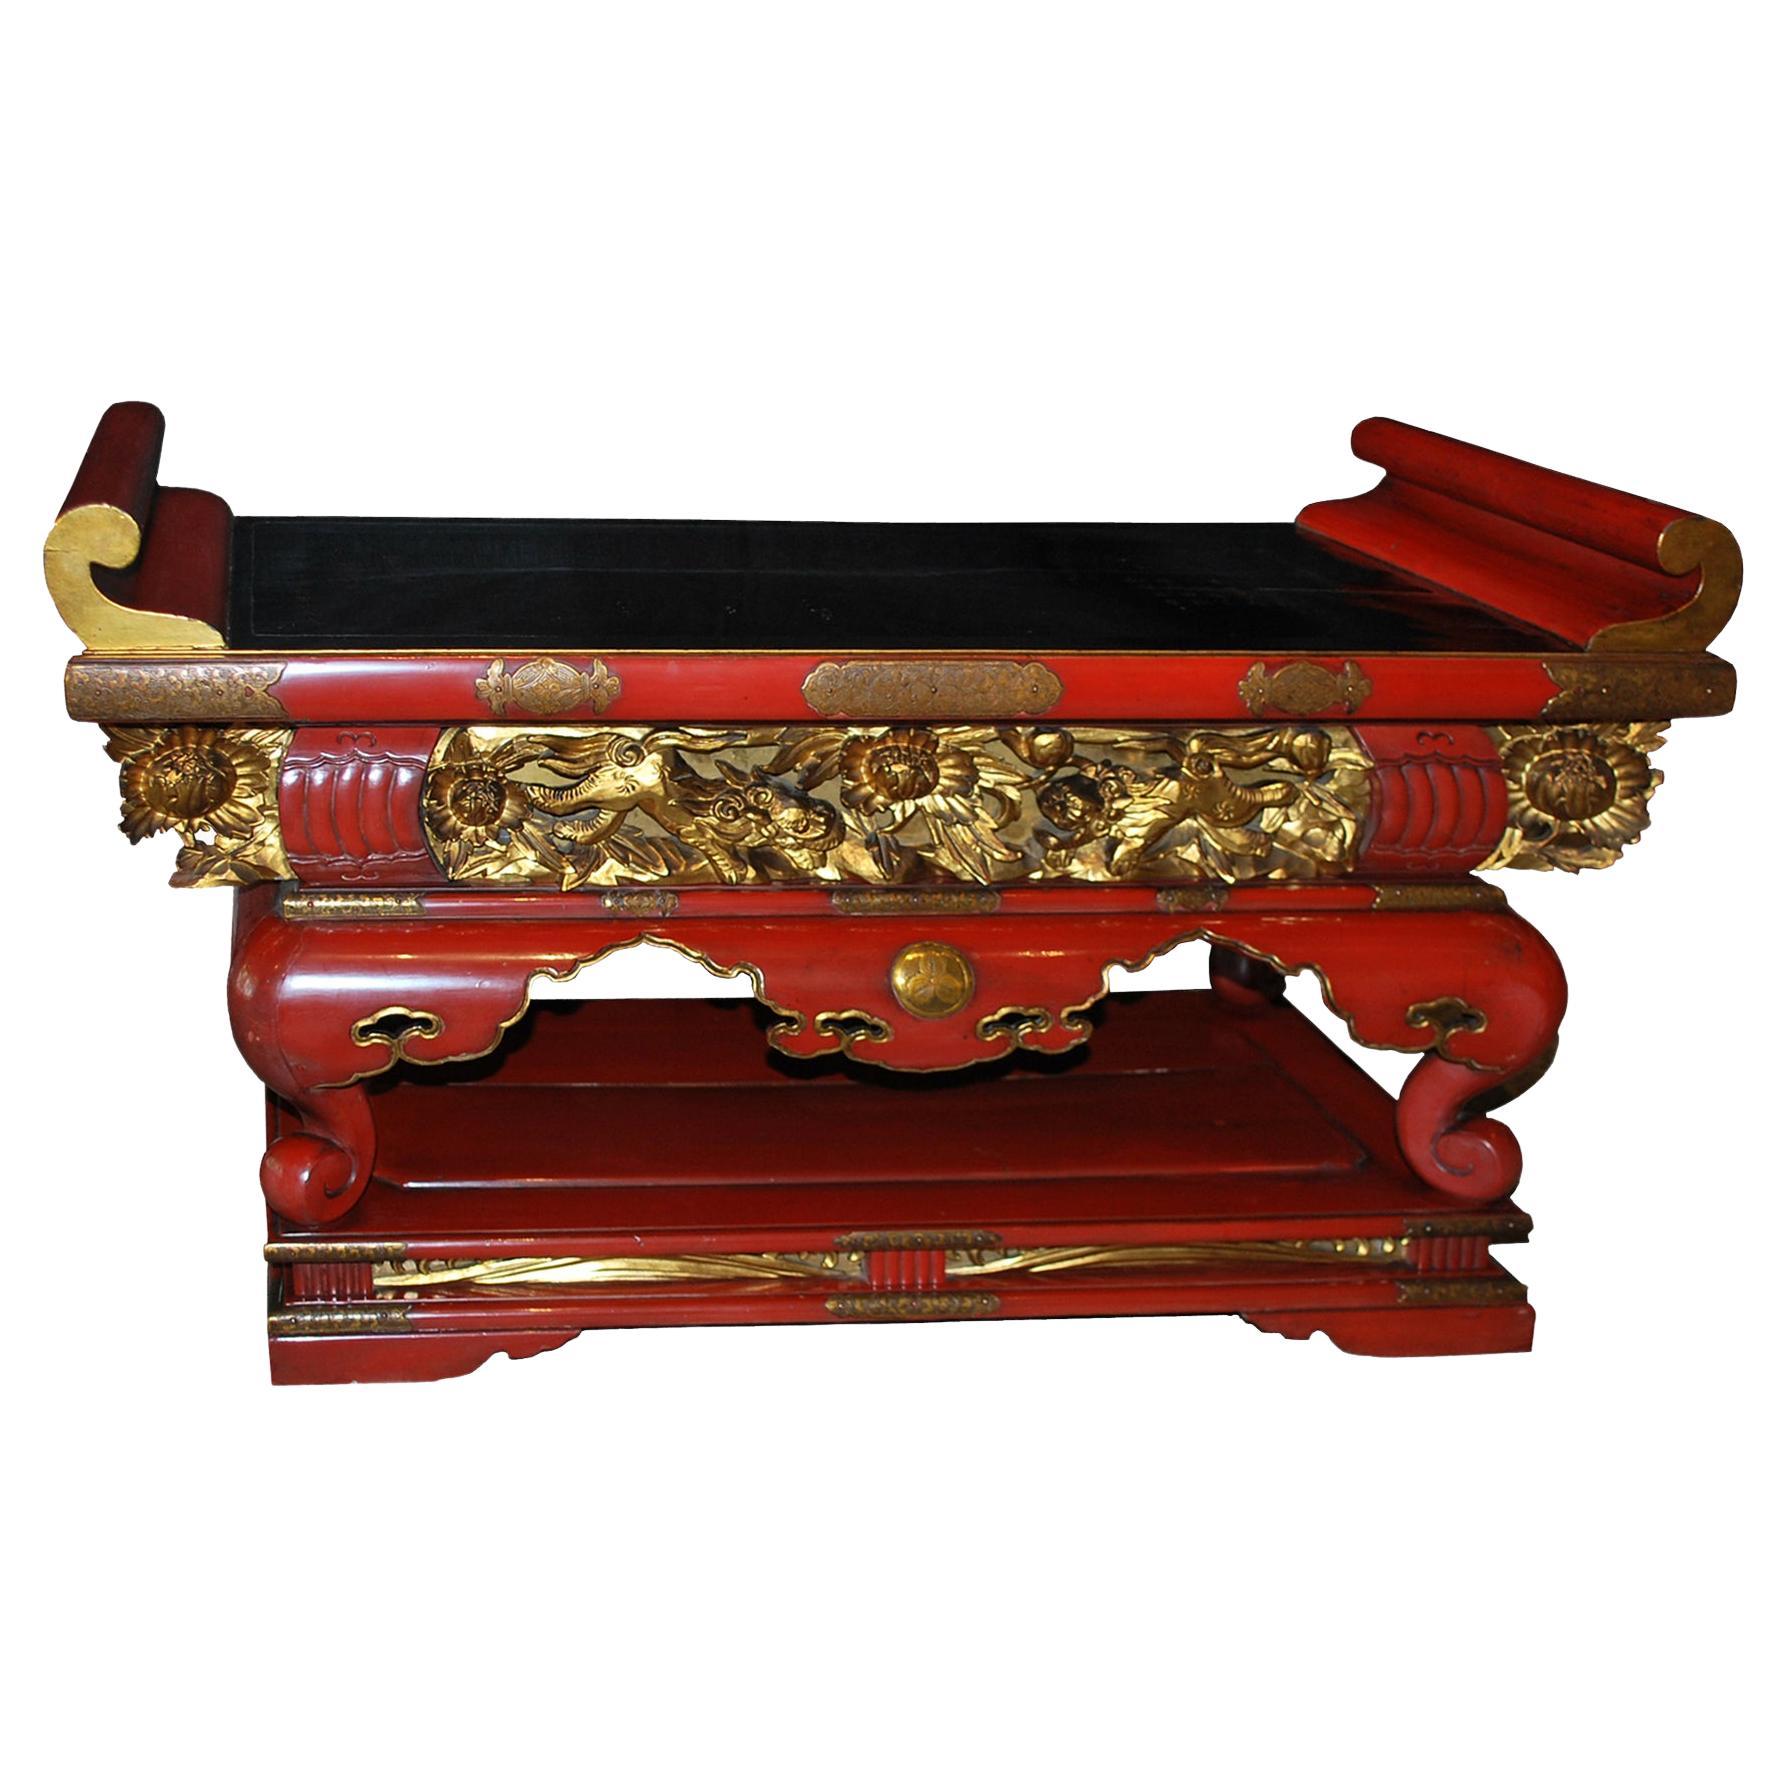 Japanese Altar Table - 18 For Sale on 1stDibs